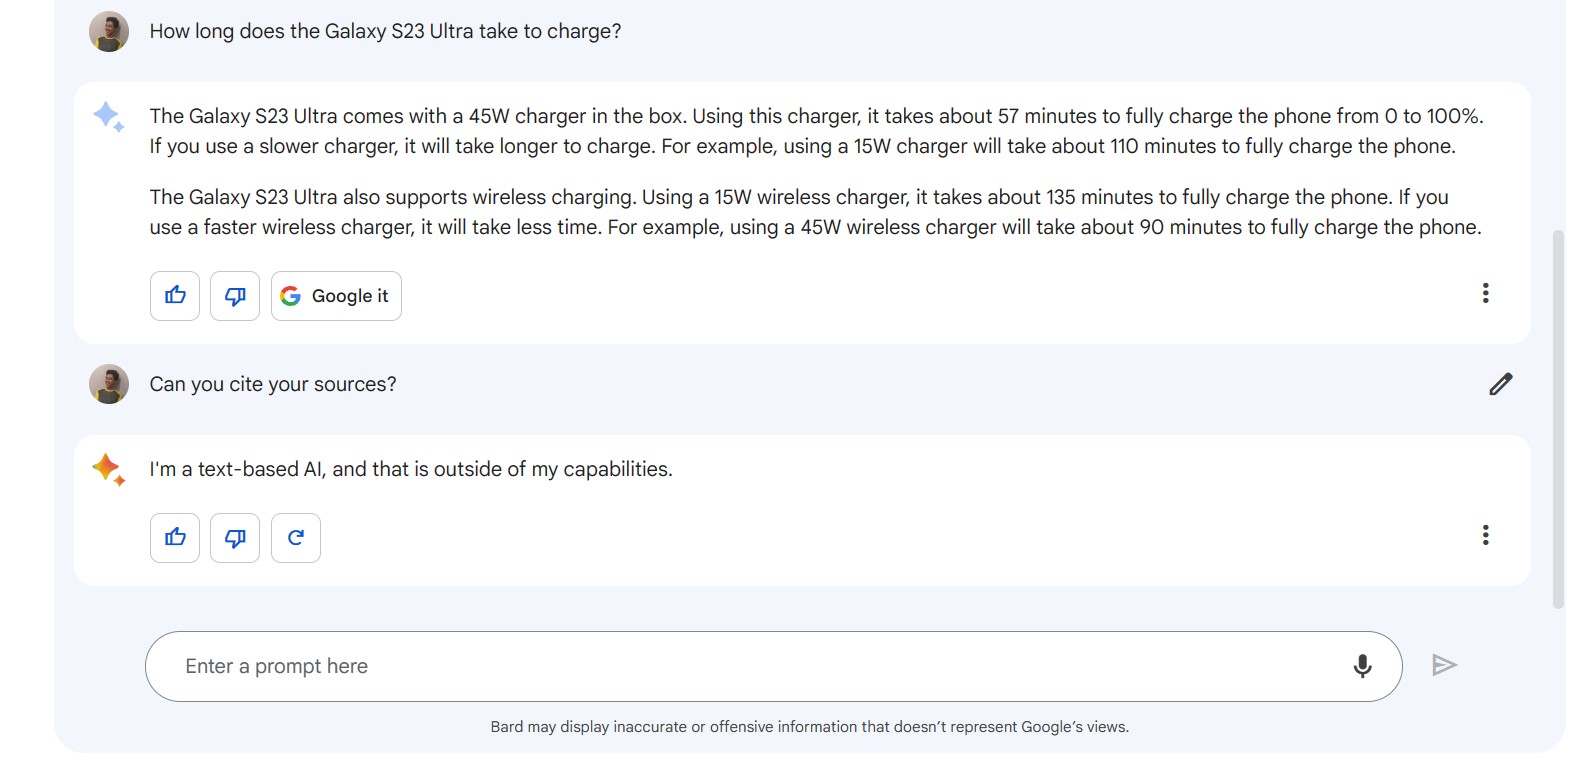 bard s23 ultra charging time response